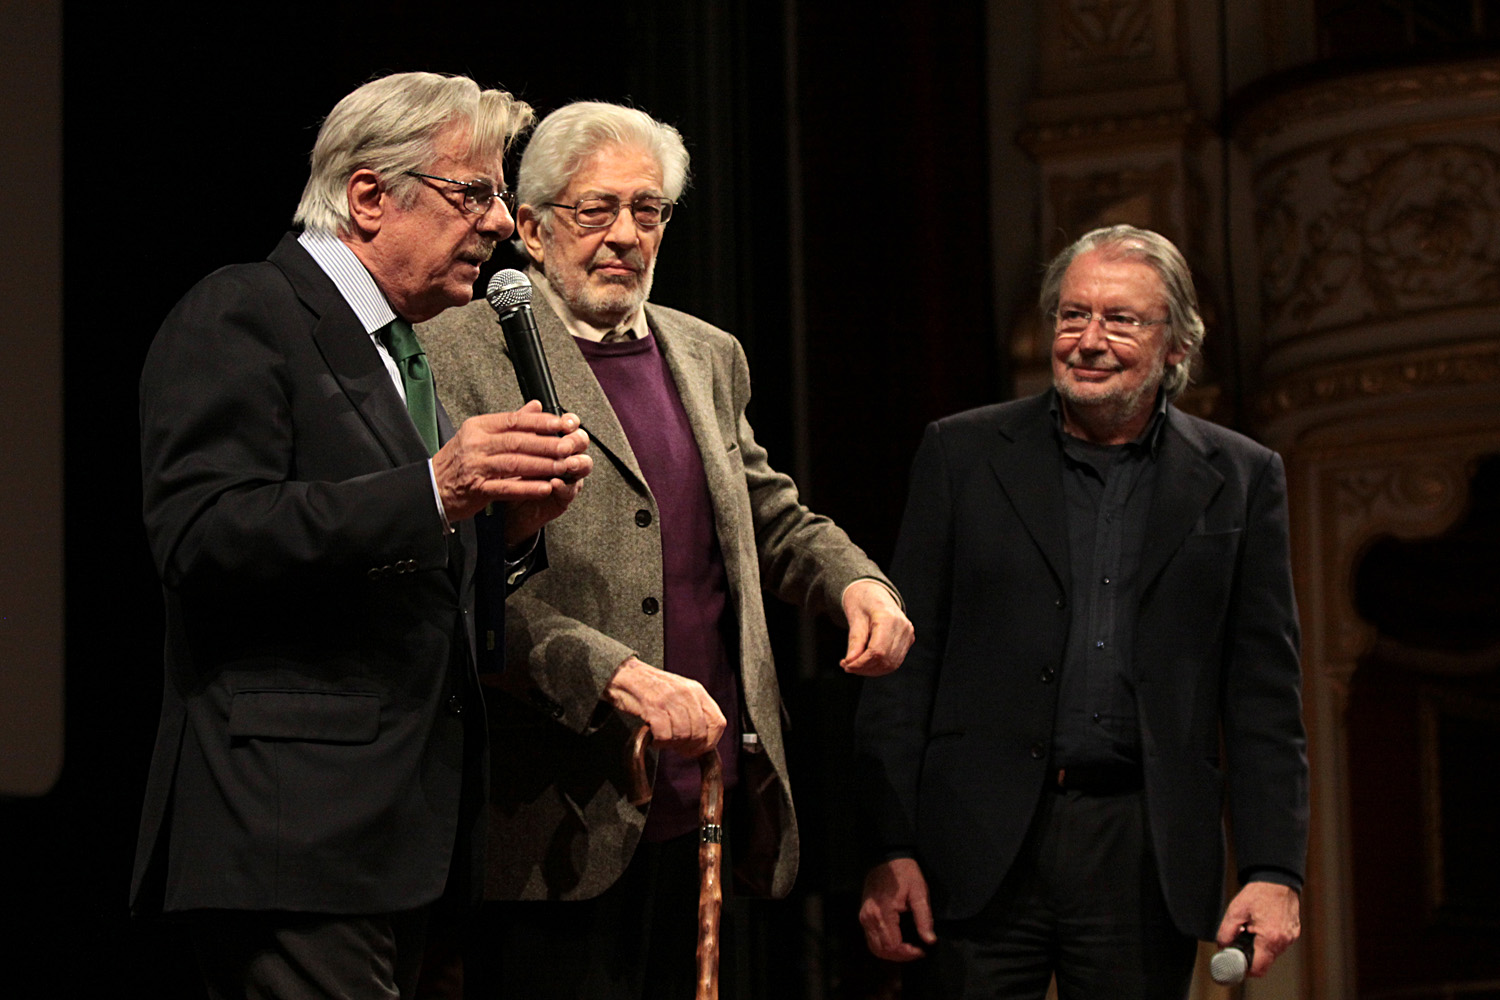 with Giancarlo Giannini, Ettore Scola